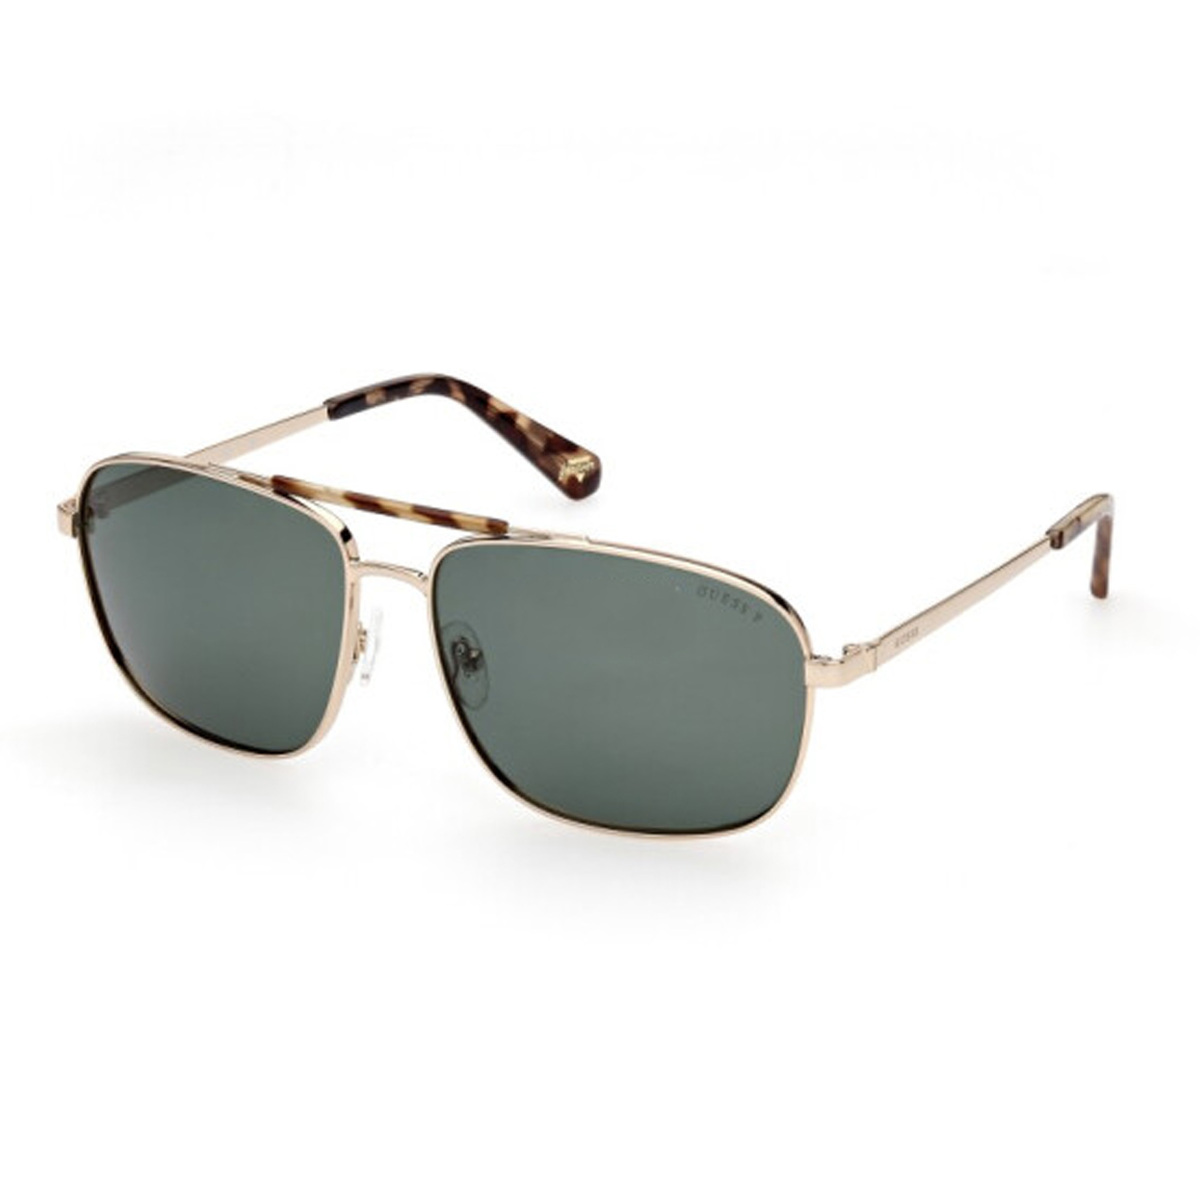 Guess Men's Navigator Sunglasses, Green, 521032R62